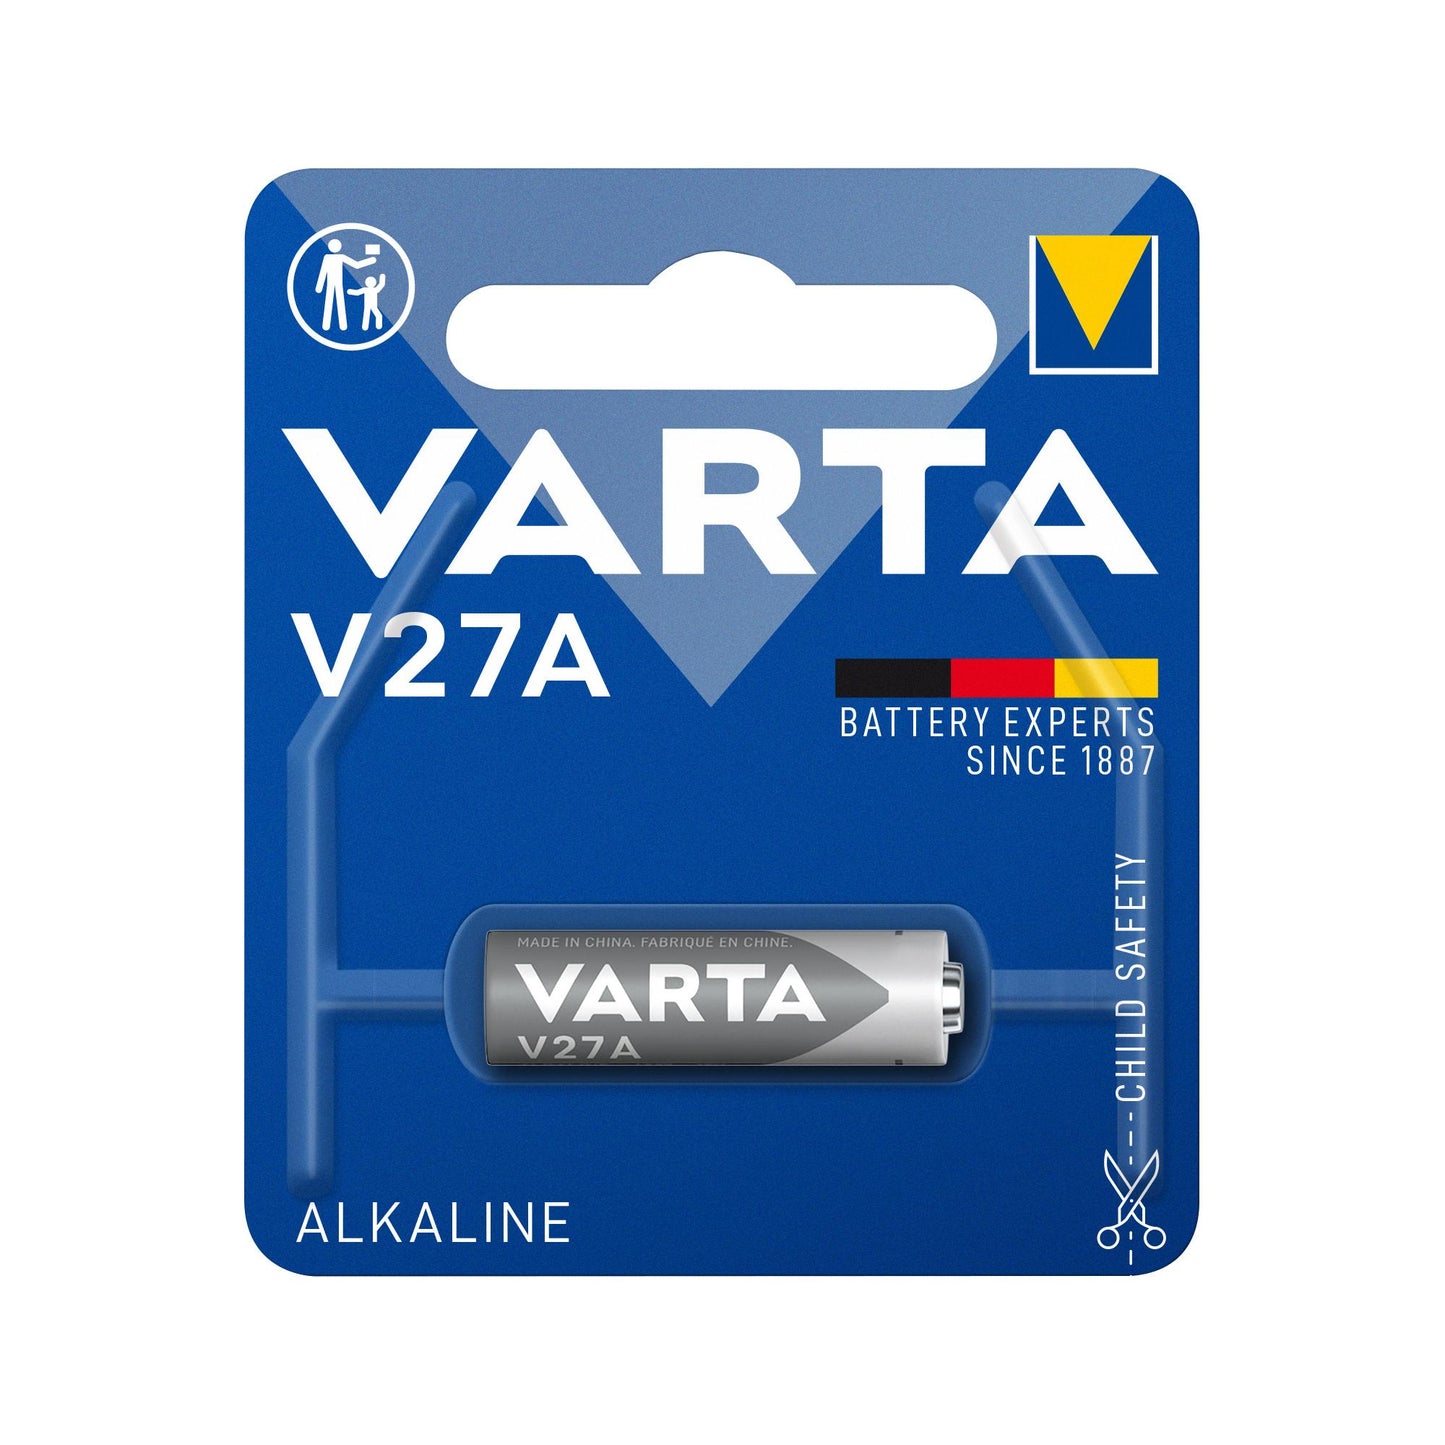 VARTA Batterie Alkaline LR27, V27A, 12V Electronics, Retail Blister (1-Pack)